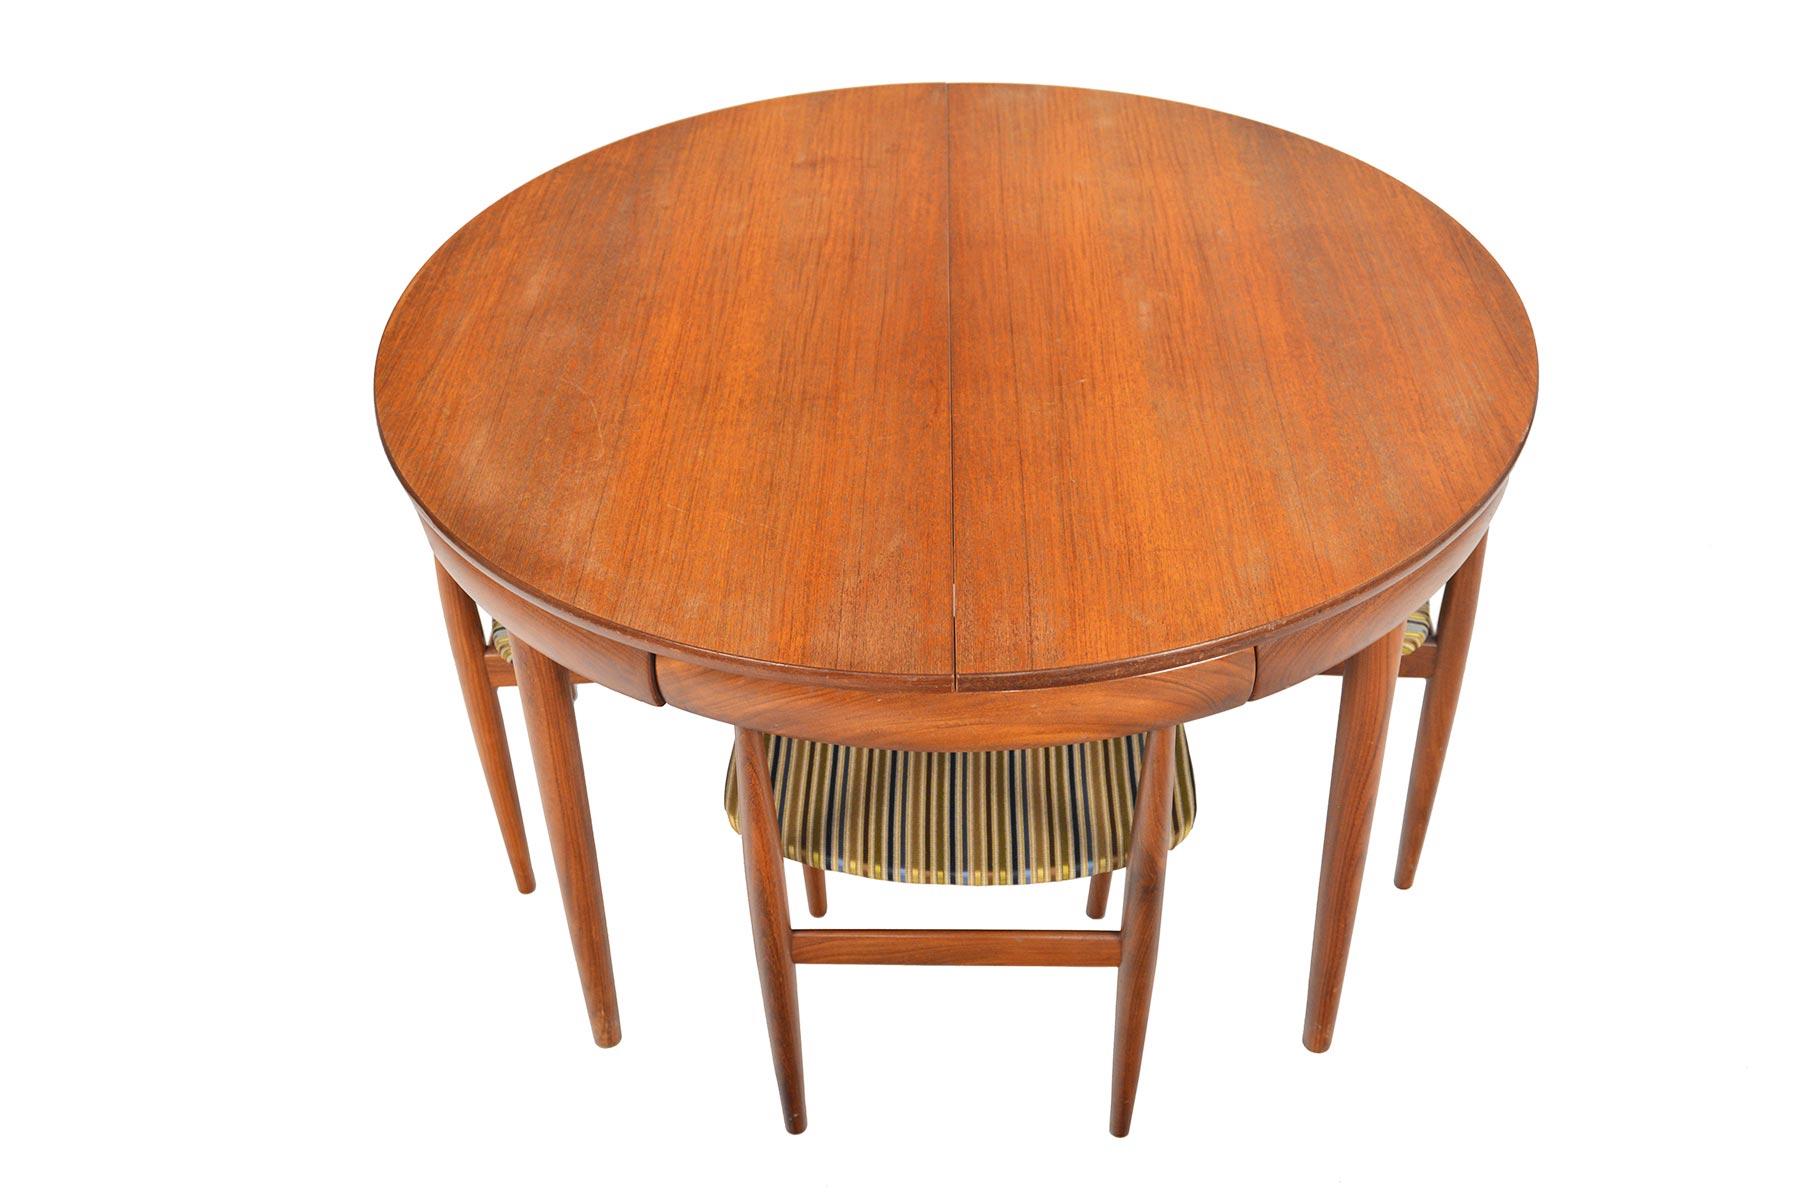 Origin: Denmark
Designer: Hans Olsen
Manufacturer: Frem Rojle
Era: 1960s
Dimensions: 47 diameter x 29.5 tall 
Expanded: 67 long x 47 deep x 29.5 tall
Chairs: 19 wide x 17 deep x 28 tall
Seat: 18 wide x 16 deep x 17.5 tall 

Condition: Table